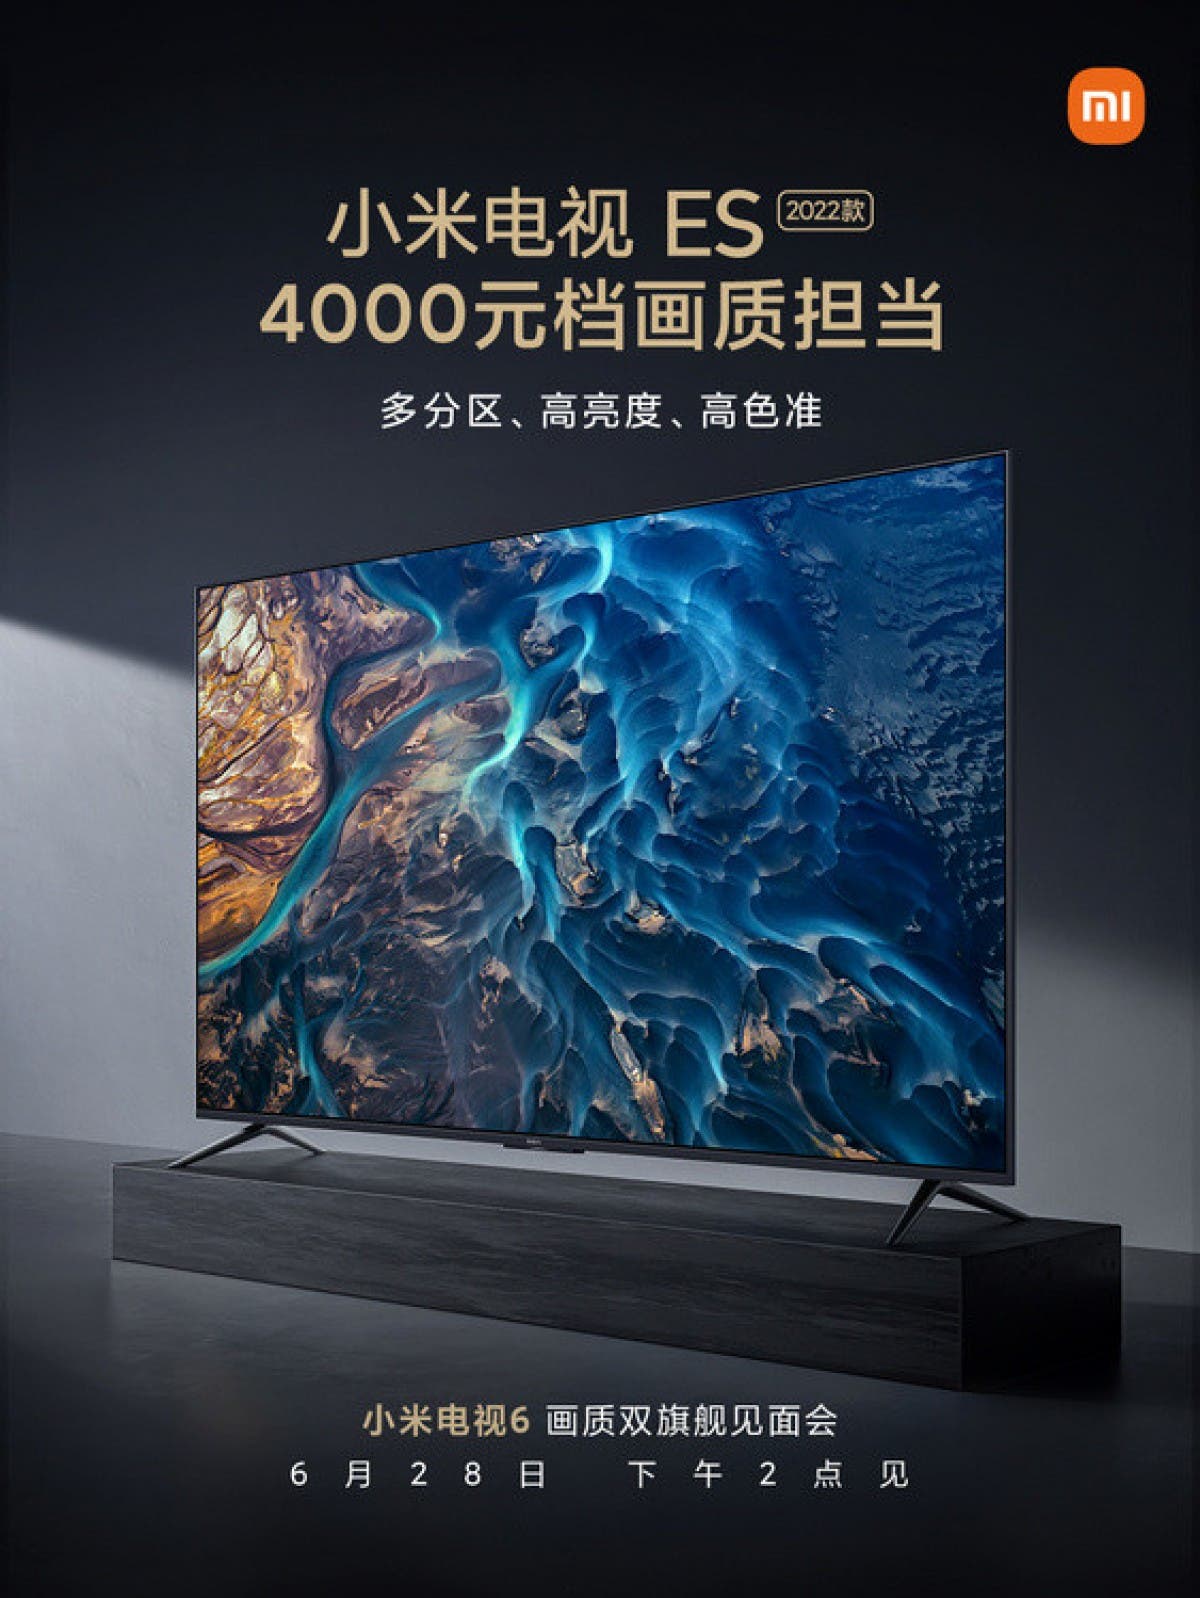 Xiaomi Mi TV ES 2022